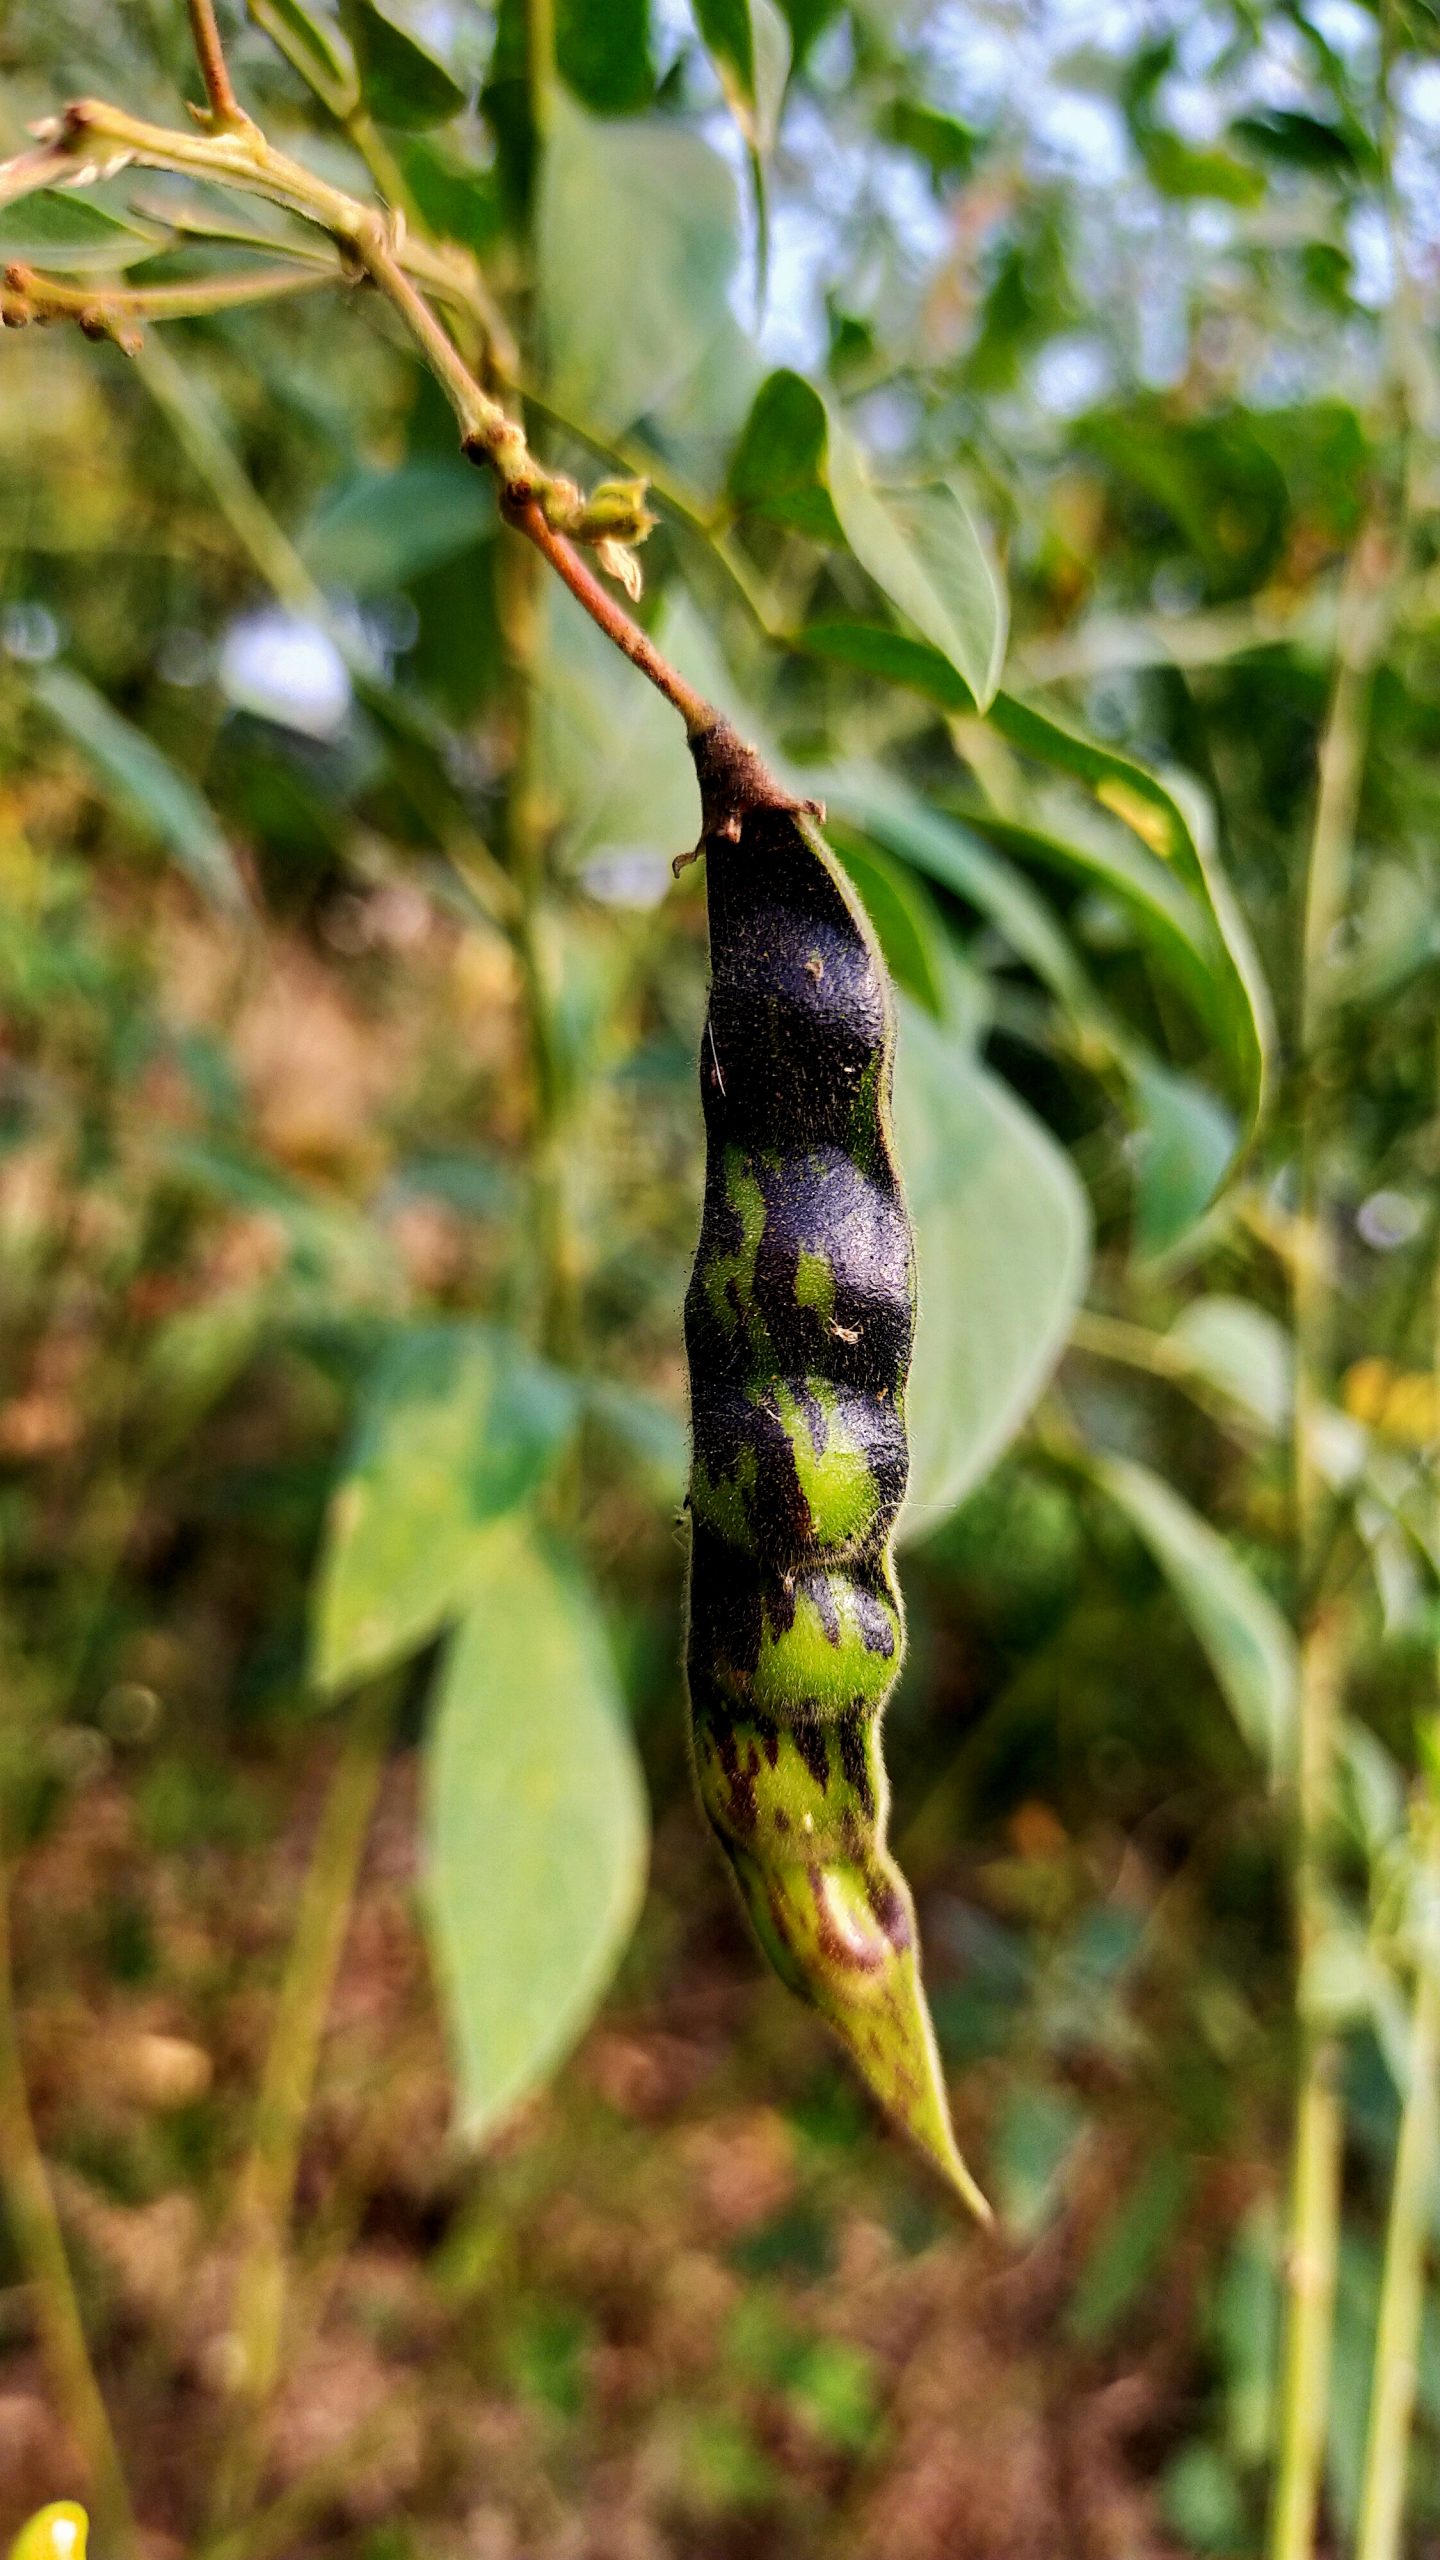 A peas plant